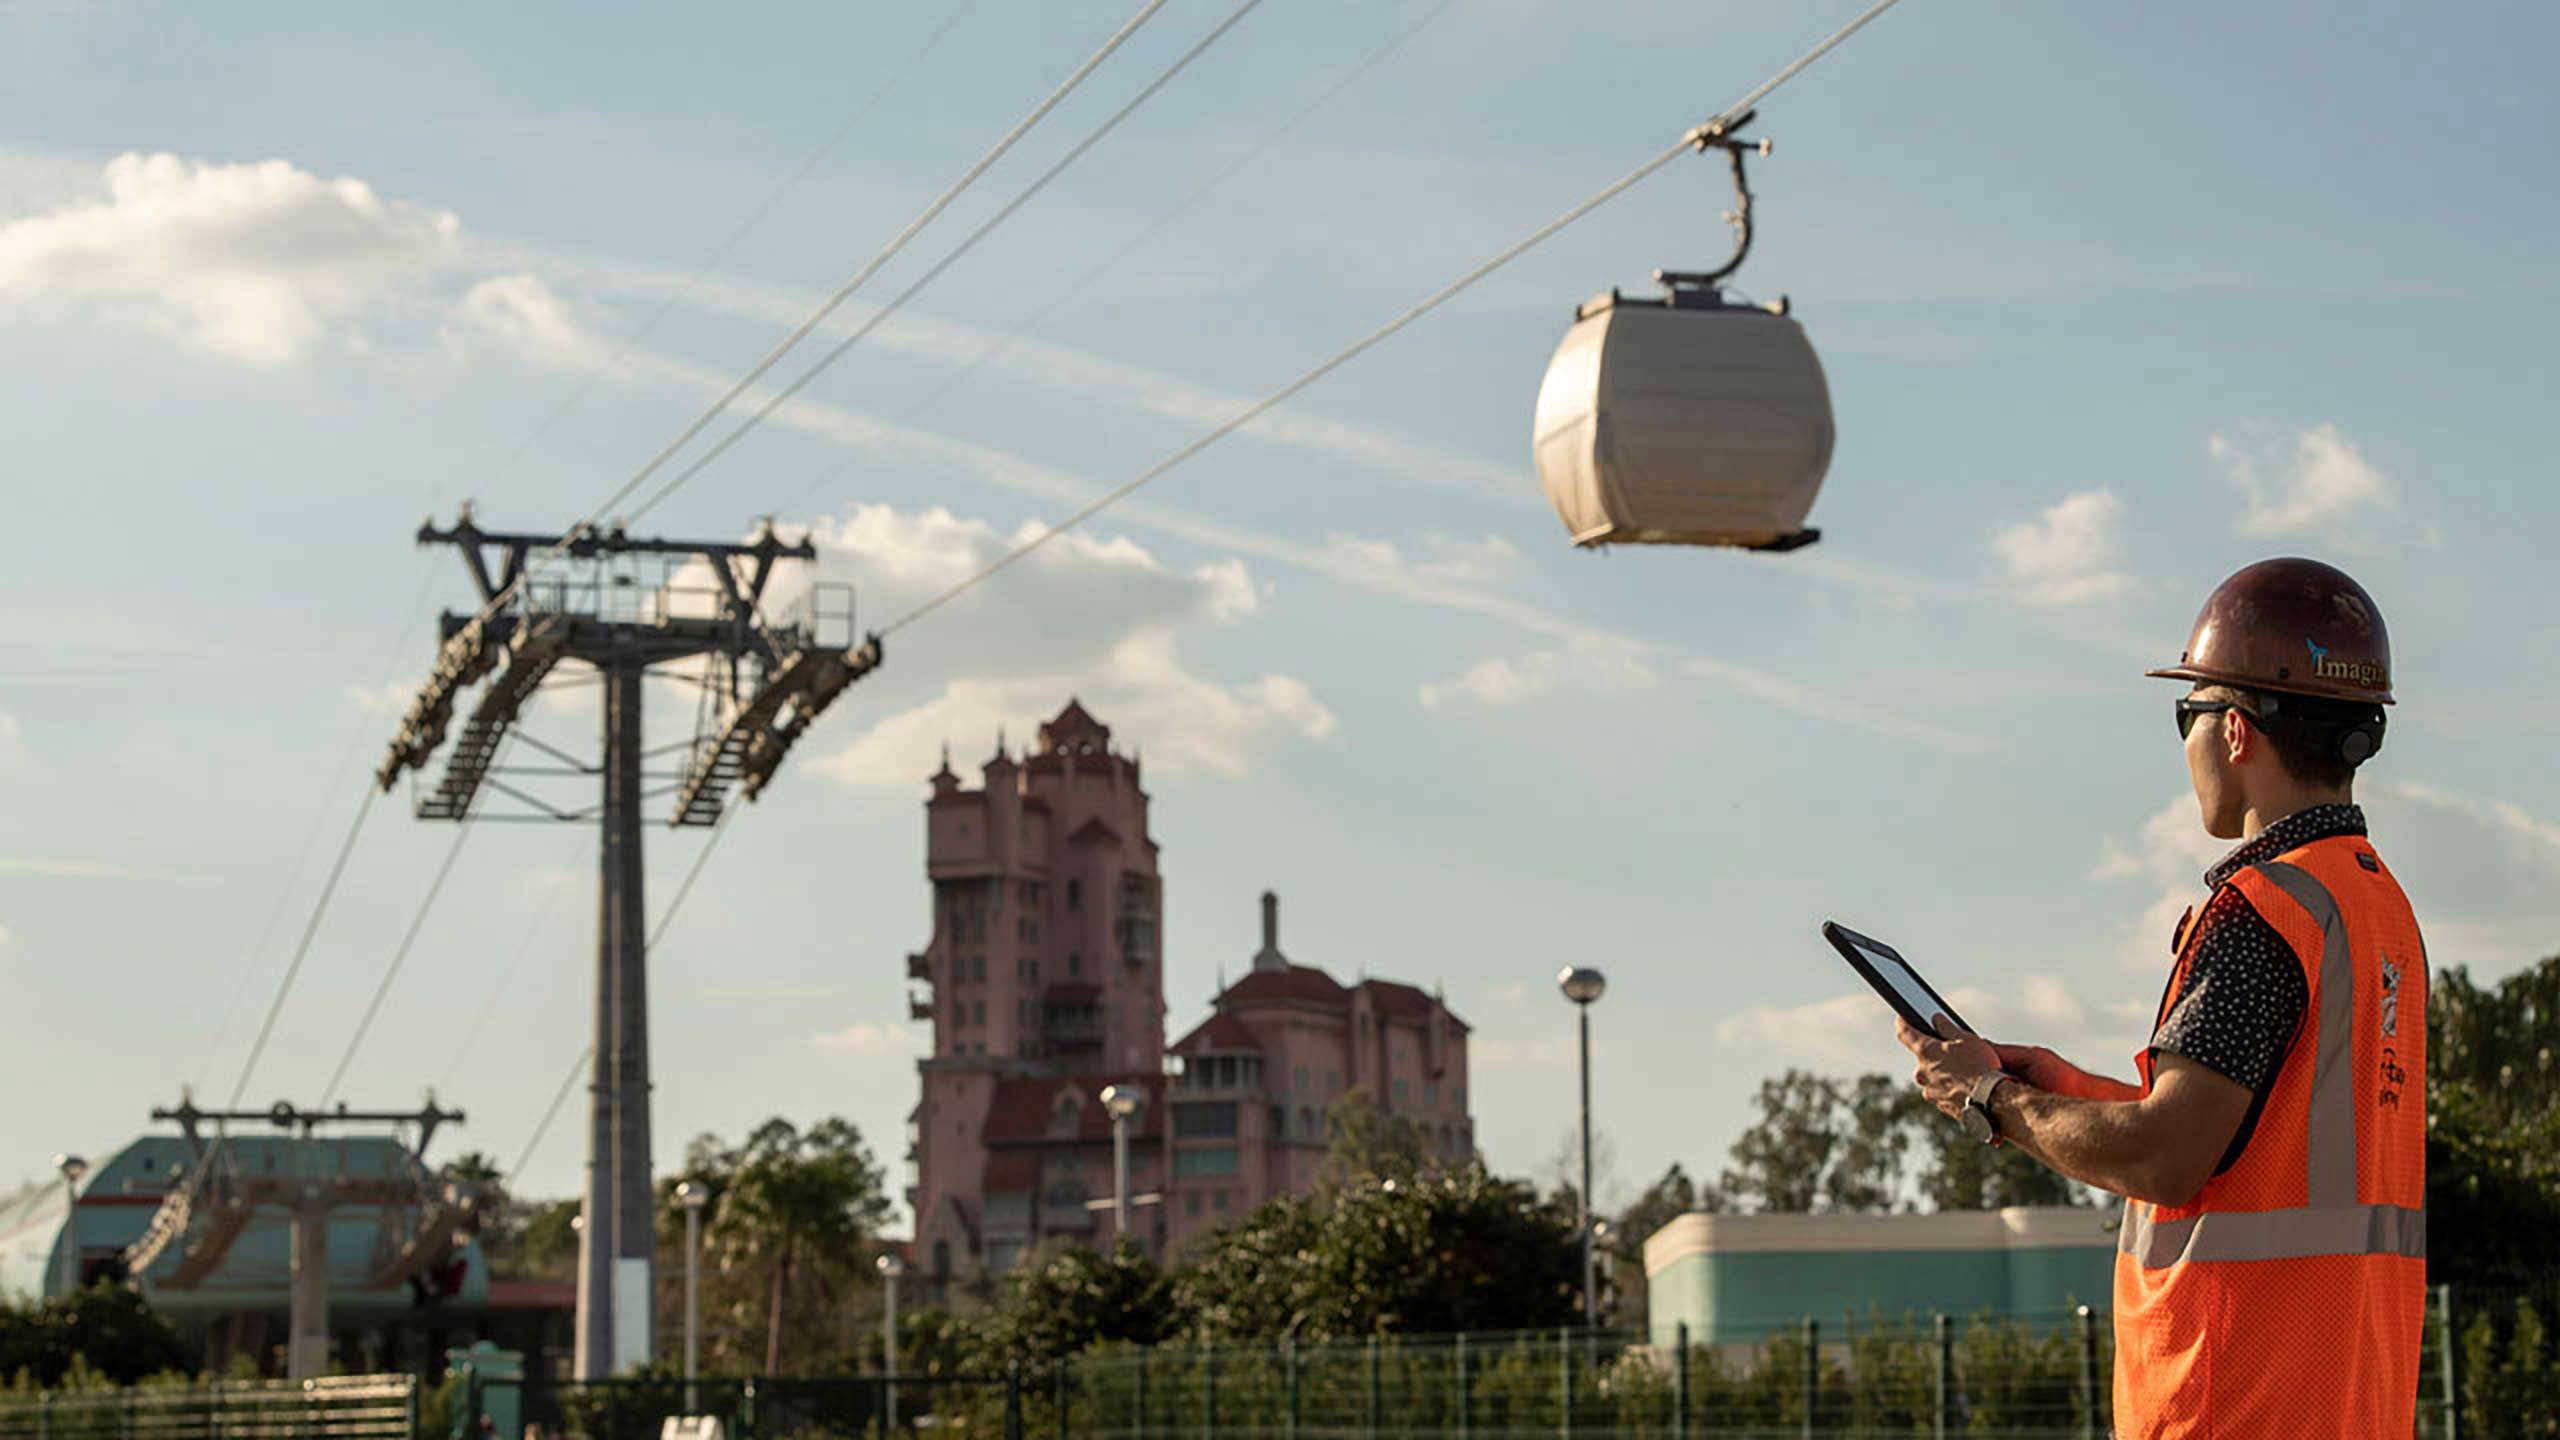 PHOTOS - Disney Skyliner begins testing guest cabins